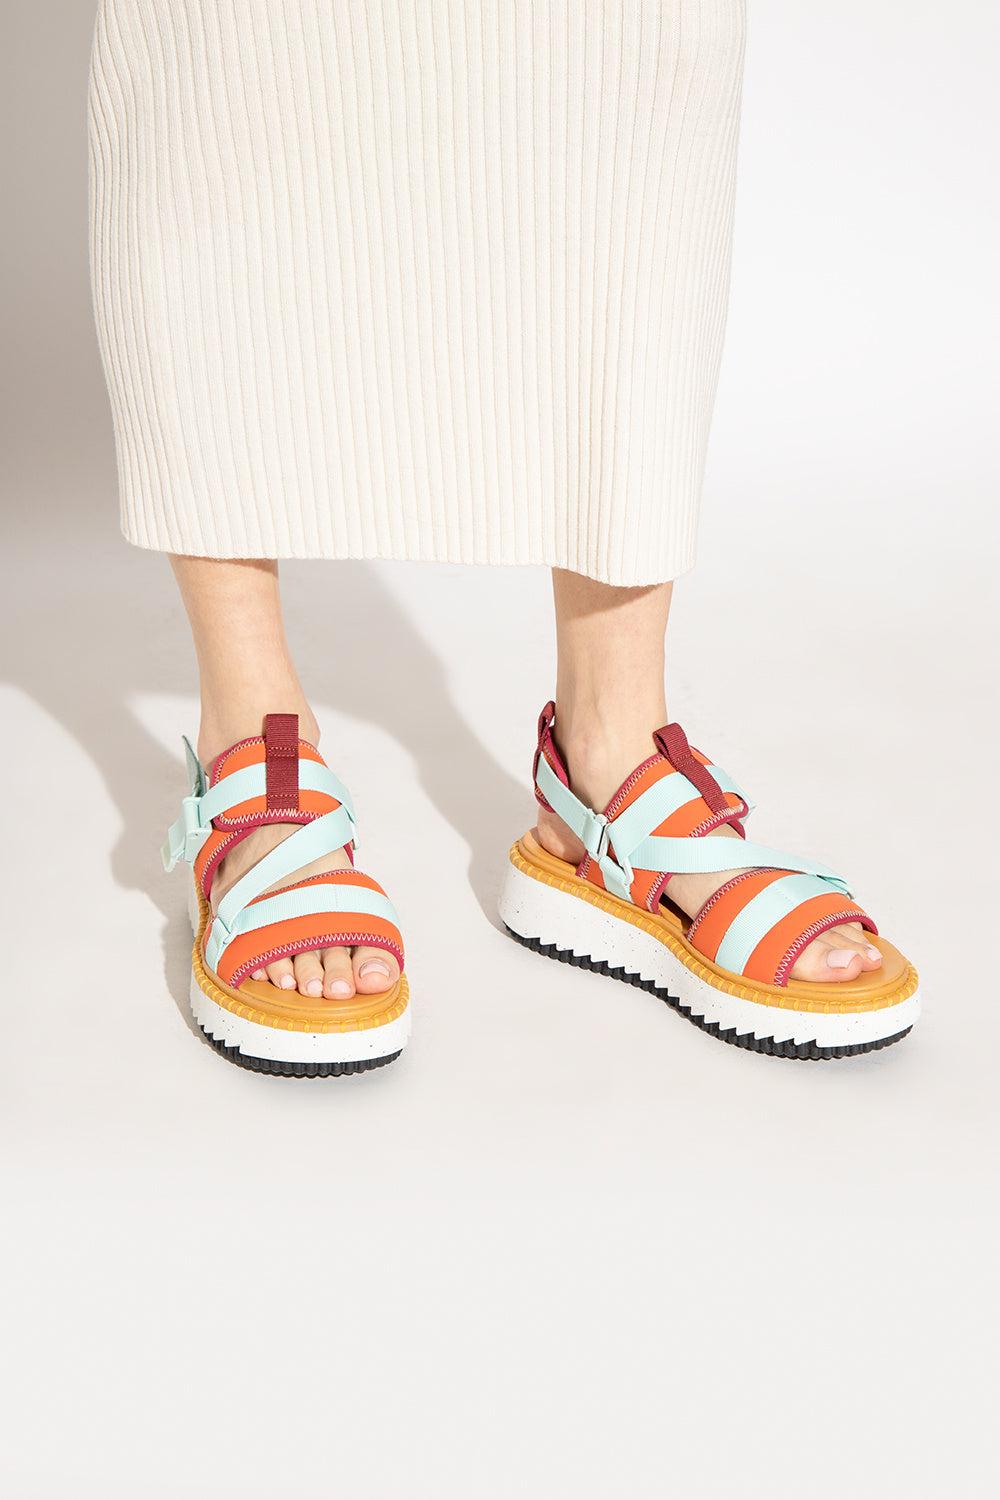 Chloé 'lilli' Platform Sandals in Red | Lyst